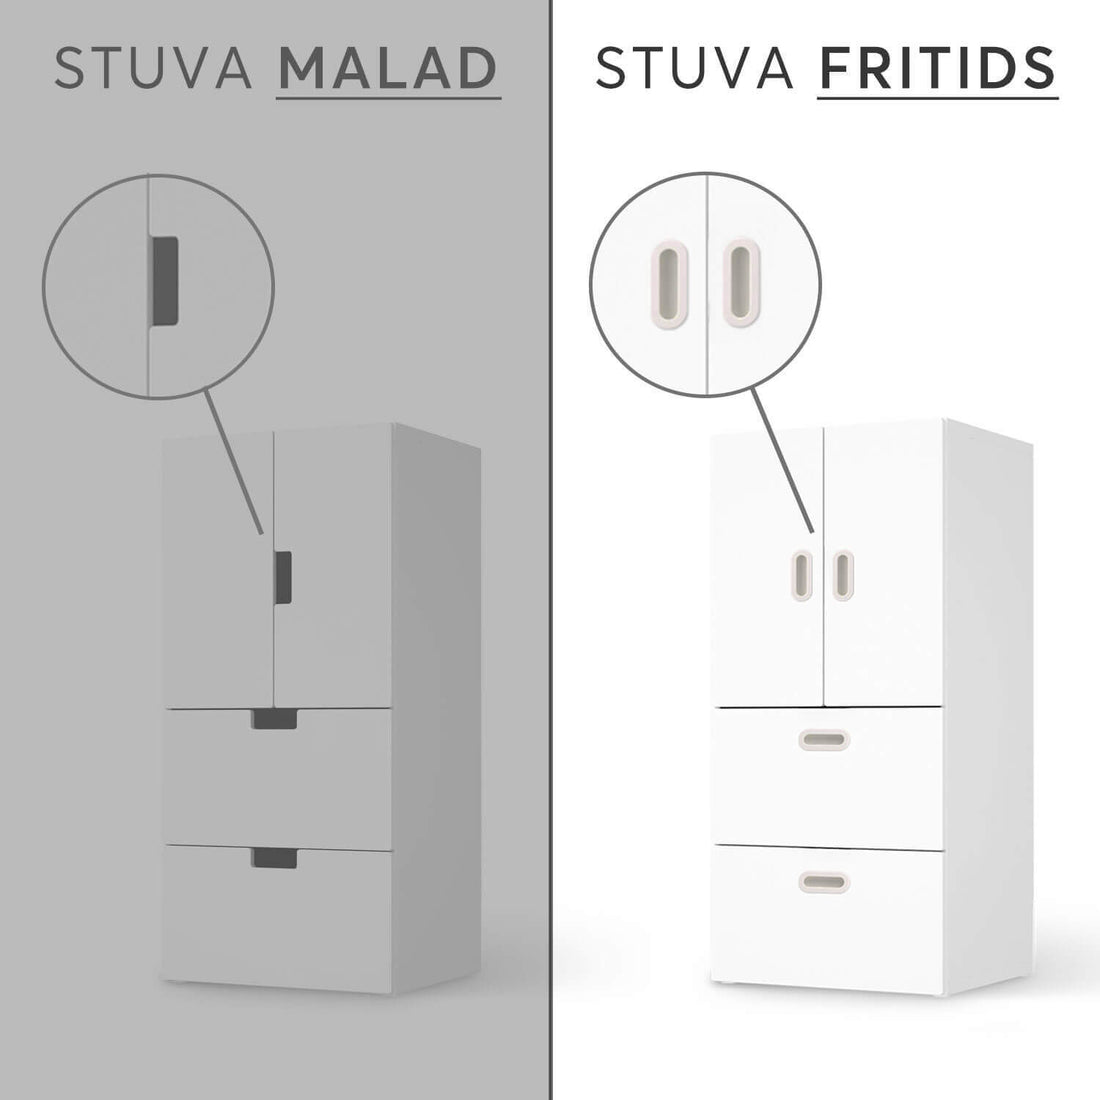 Vergleich IKEA Stuva Fritids / Malad - Outback Australia